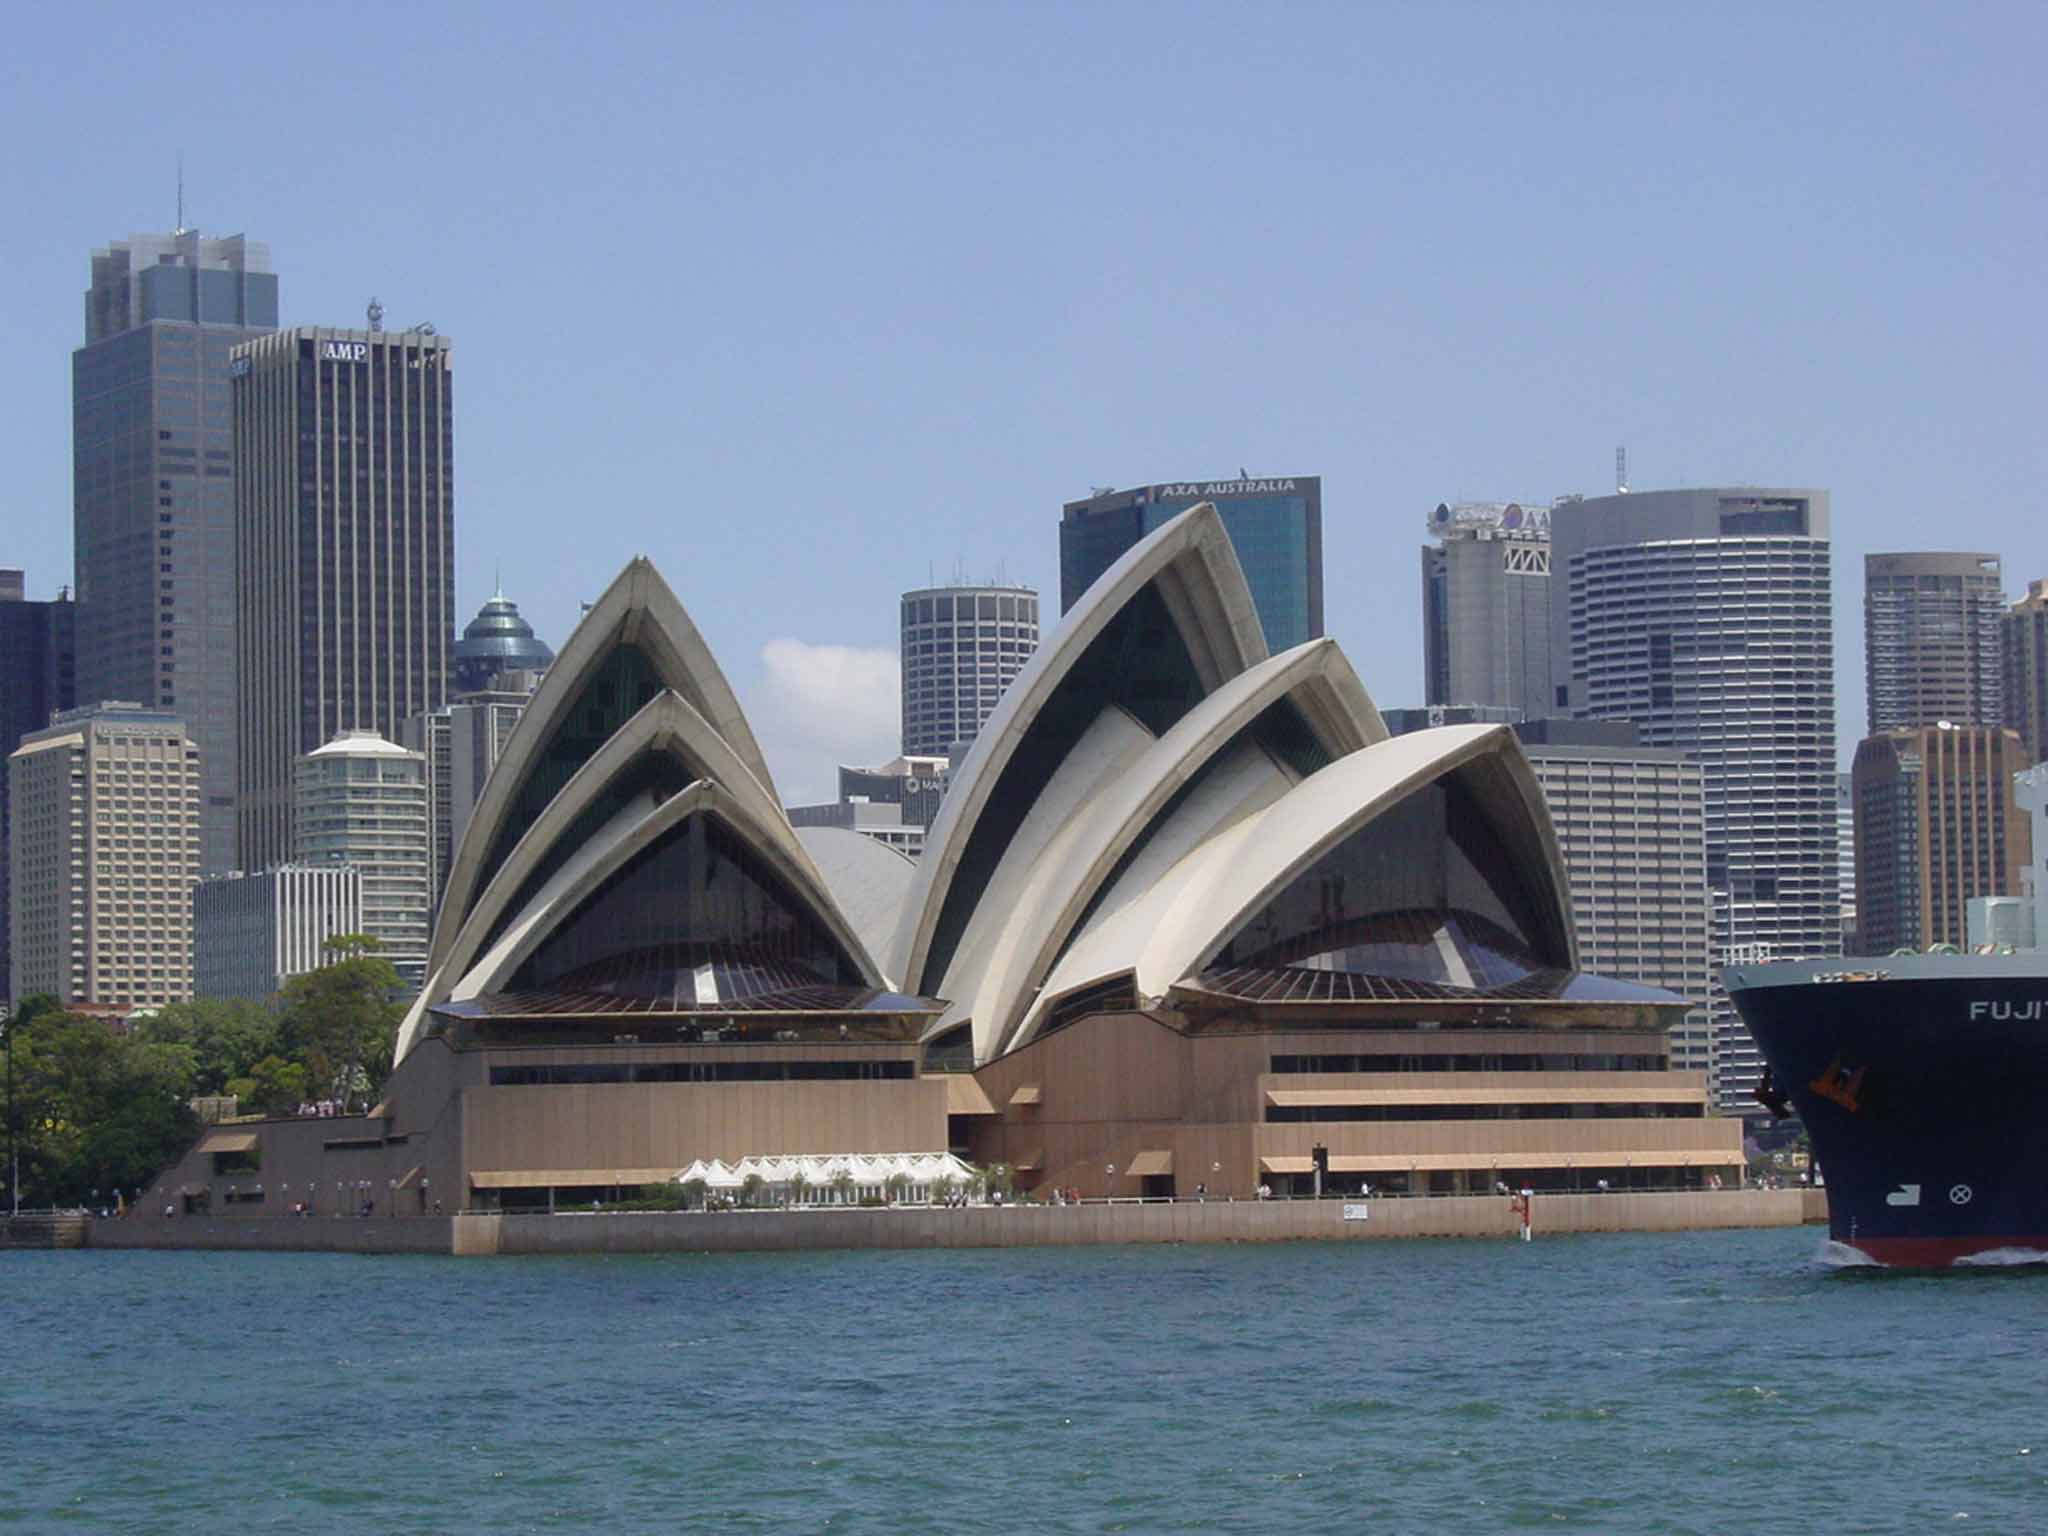 Sydney: Problems with upgrade bid